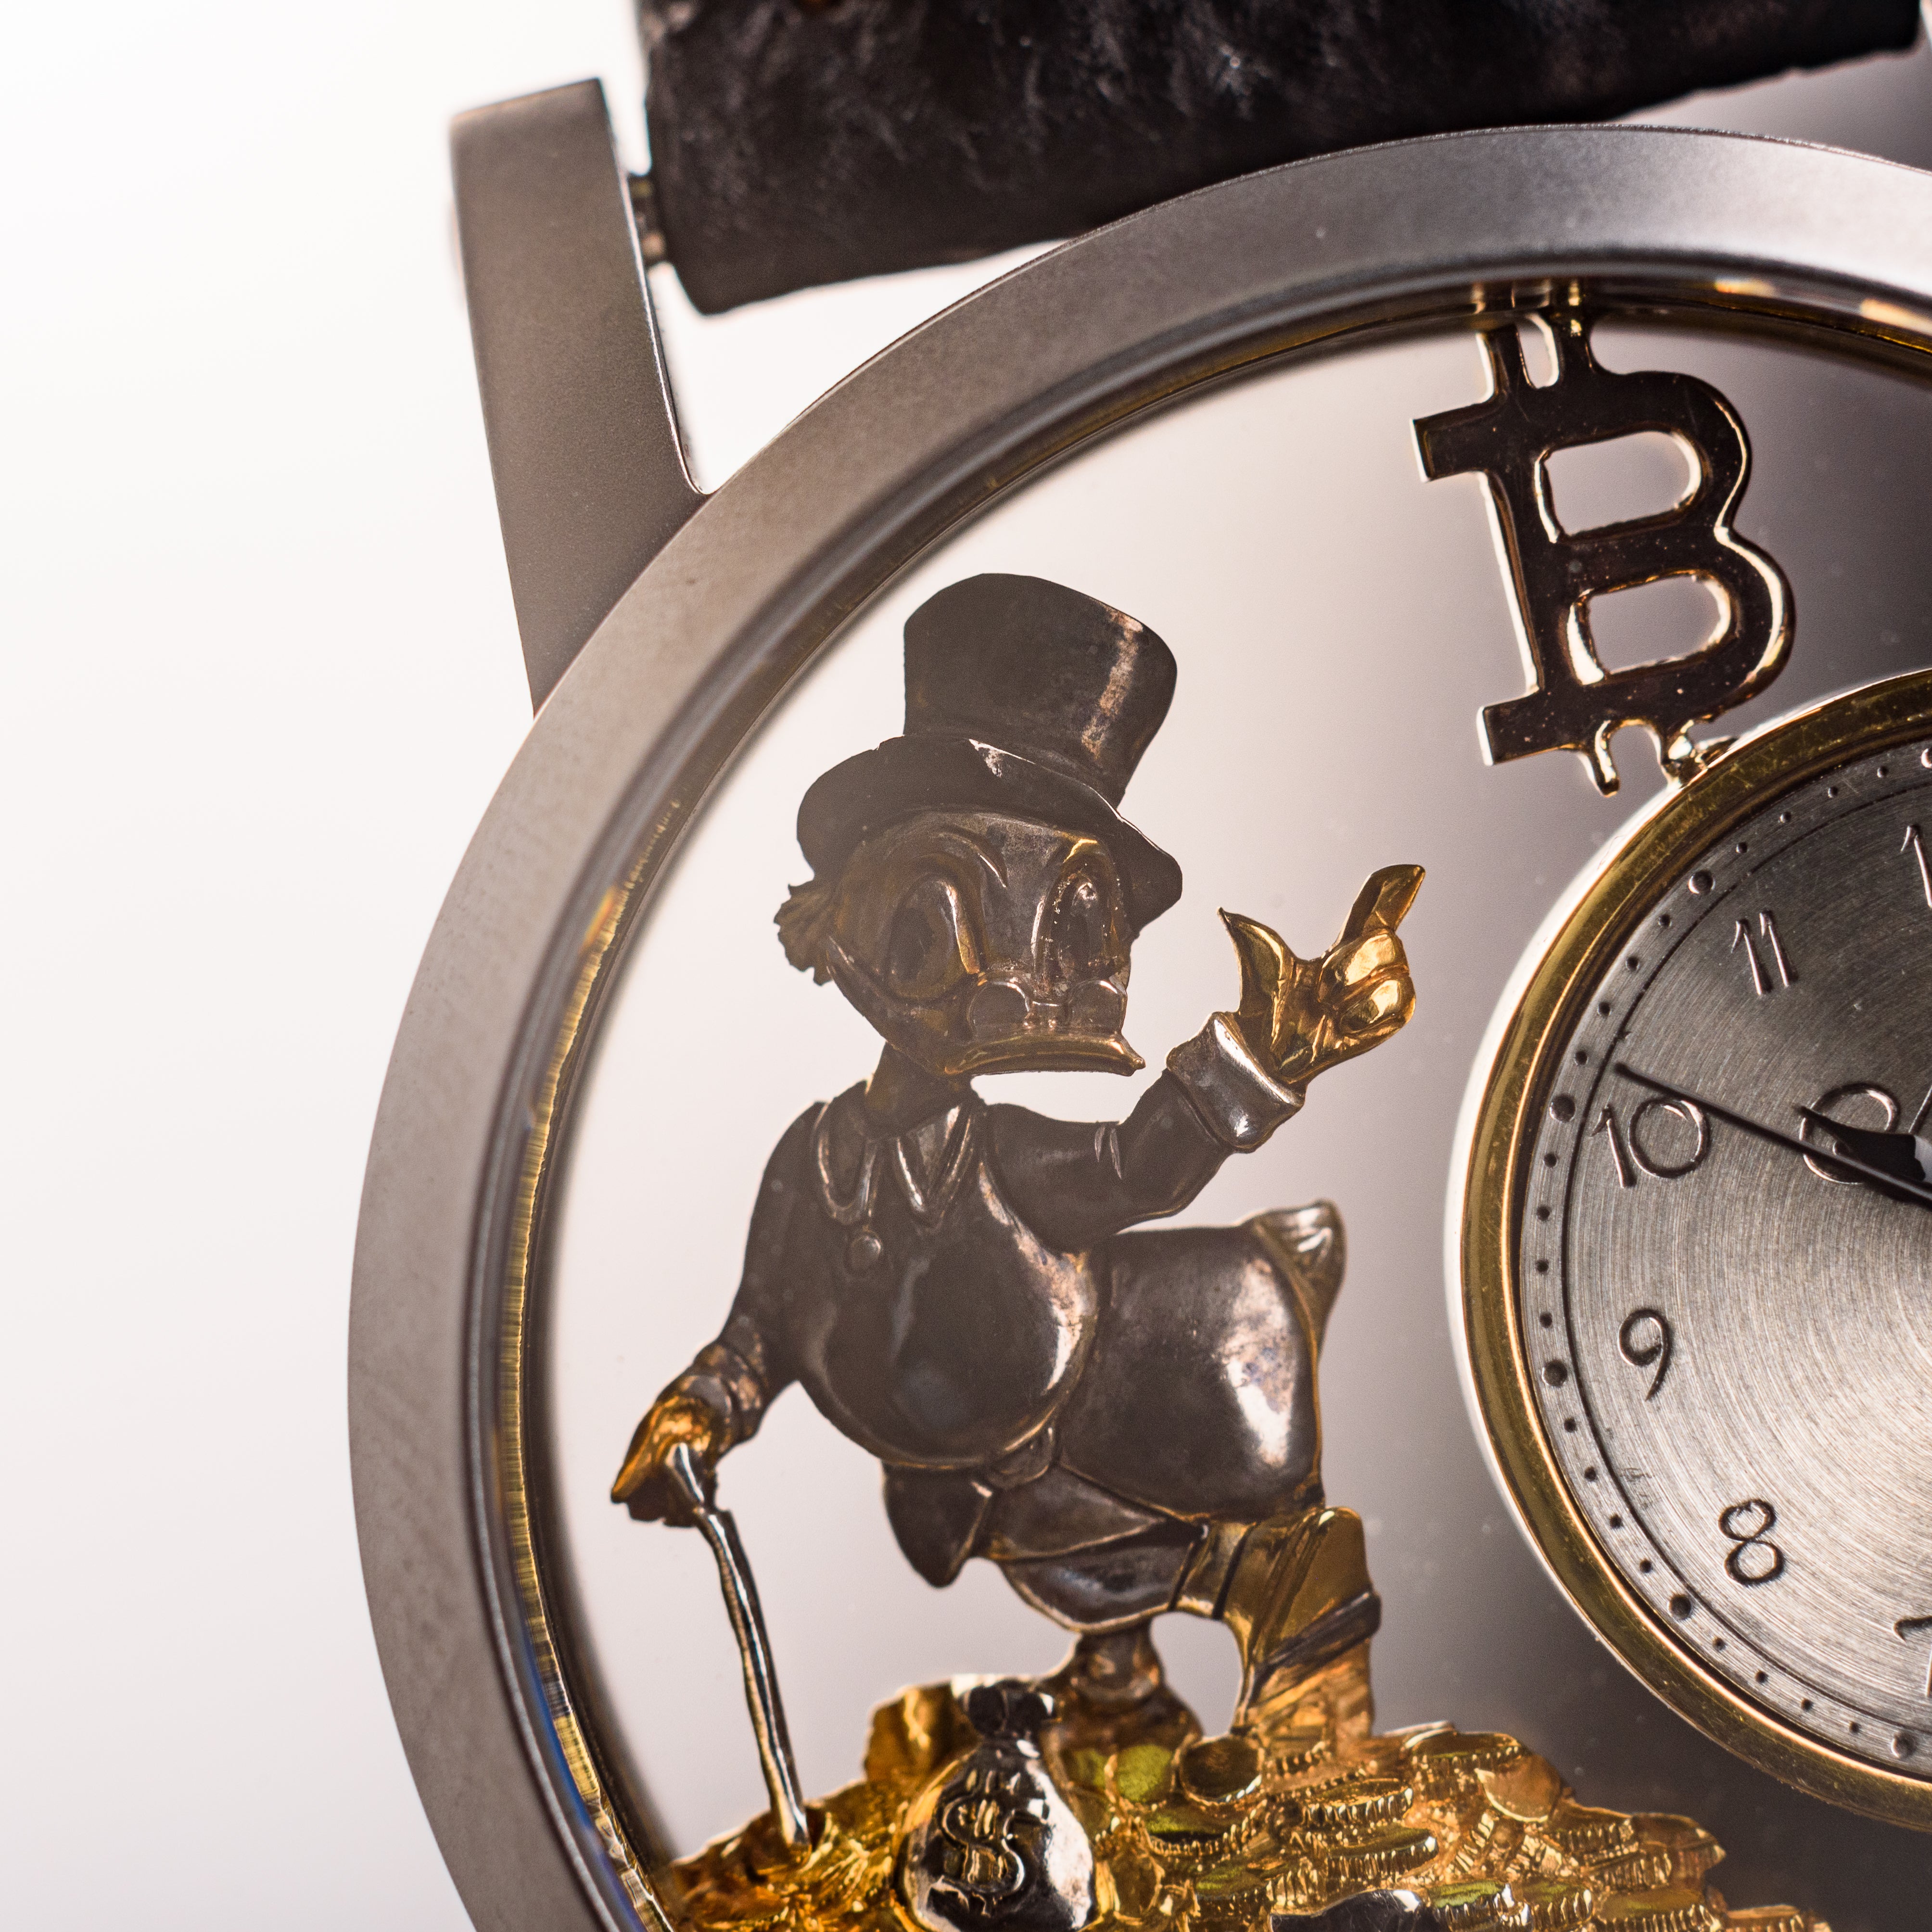 Mole - Bitcoin of Uncle Scrooge, ETA 2671 automatic, 3D skeleton wristwatch